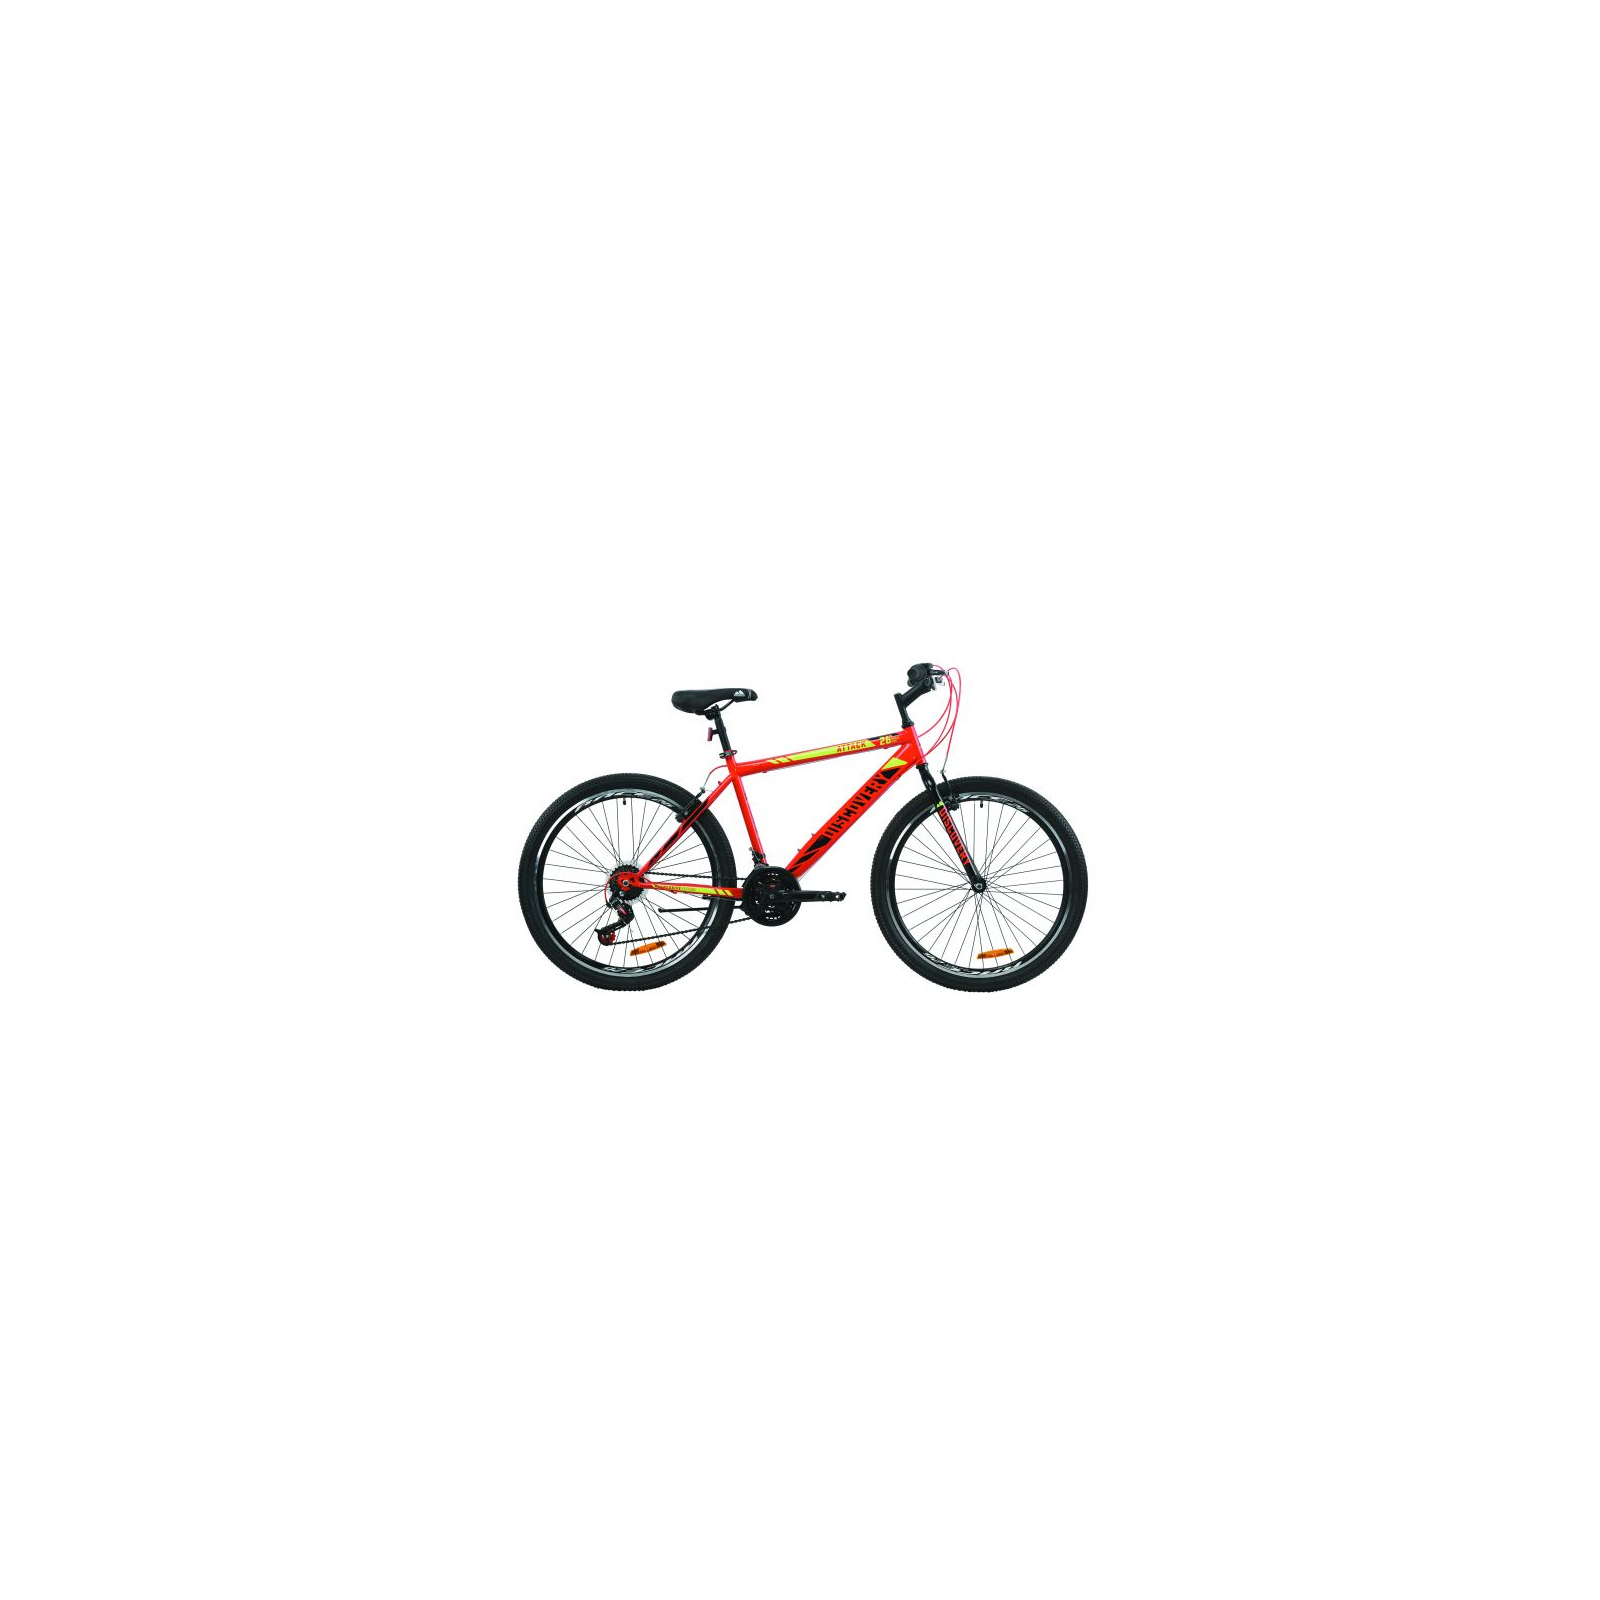 Велосипед Discovery 26" ATTACK Vbr рама-18" St 2020 красно-черный с салатовым (OPS-DIS-26-299)